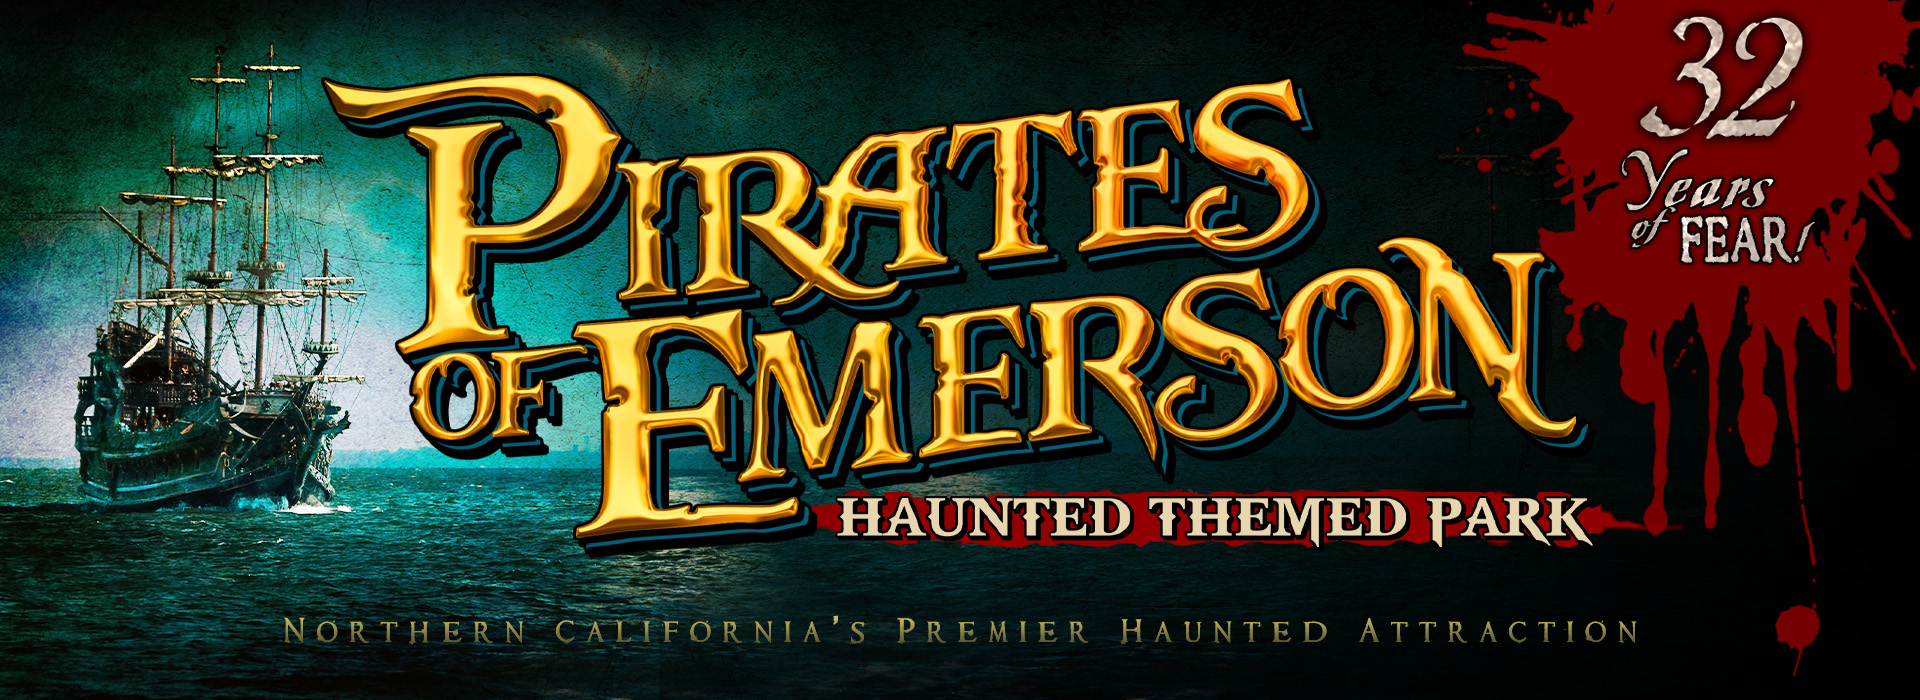 Pirates of Emerson Haunted Theme Park (Oct 30-Nov 2)